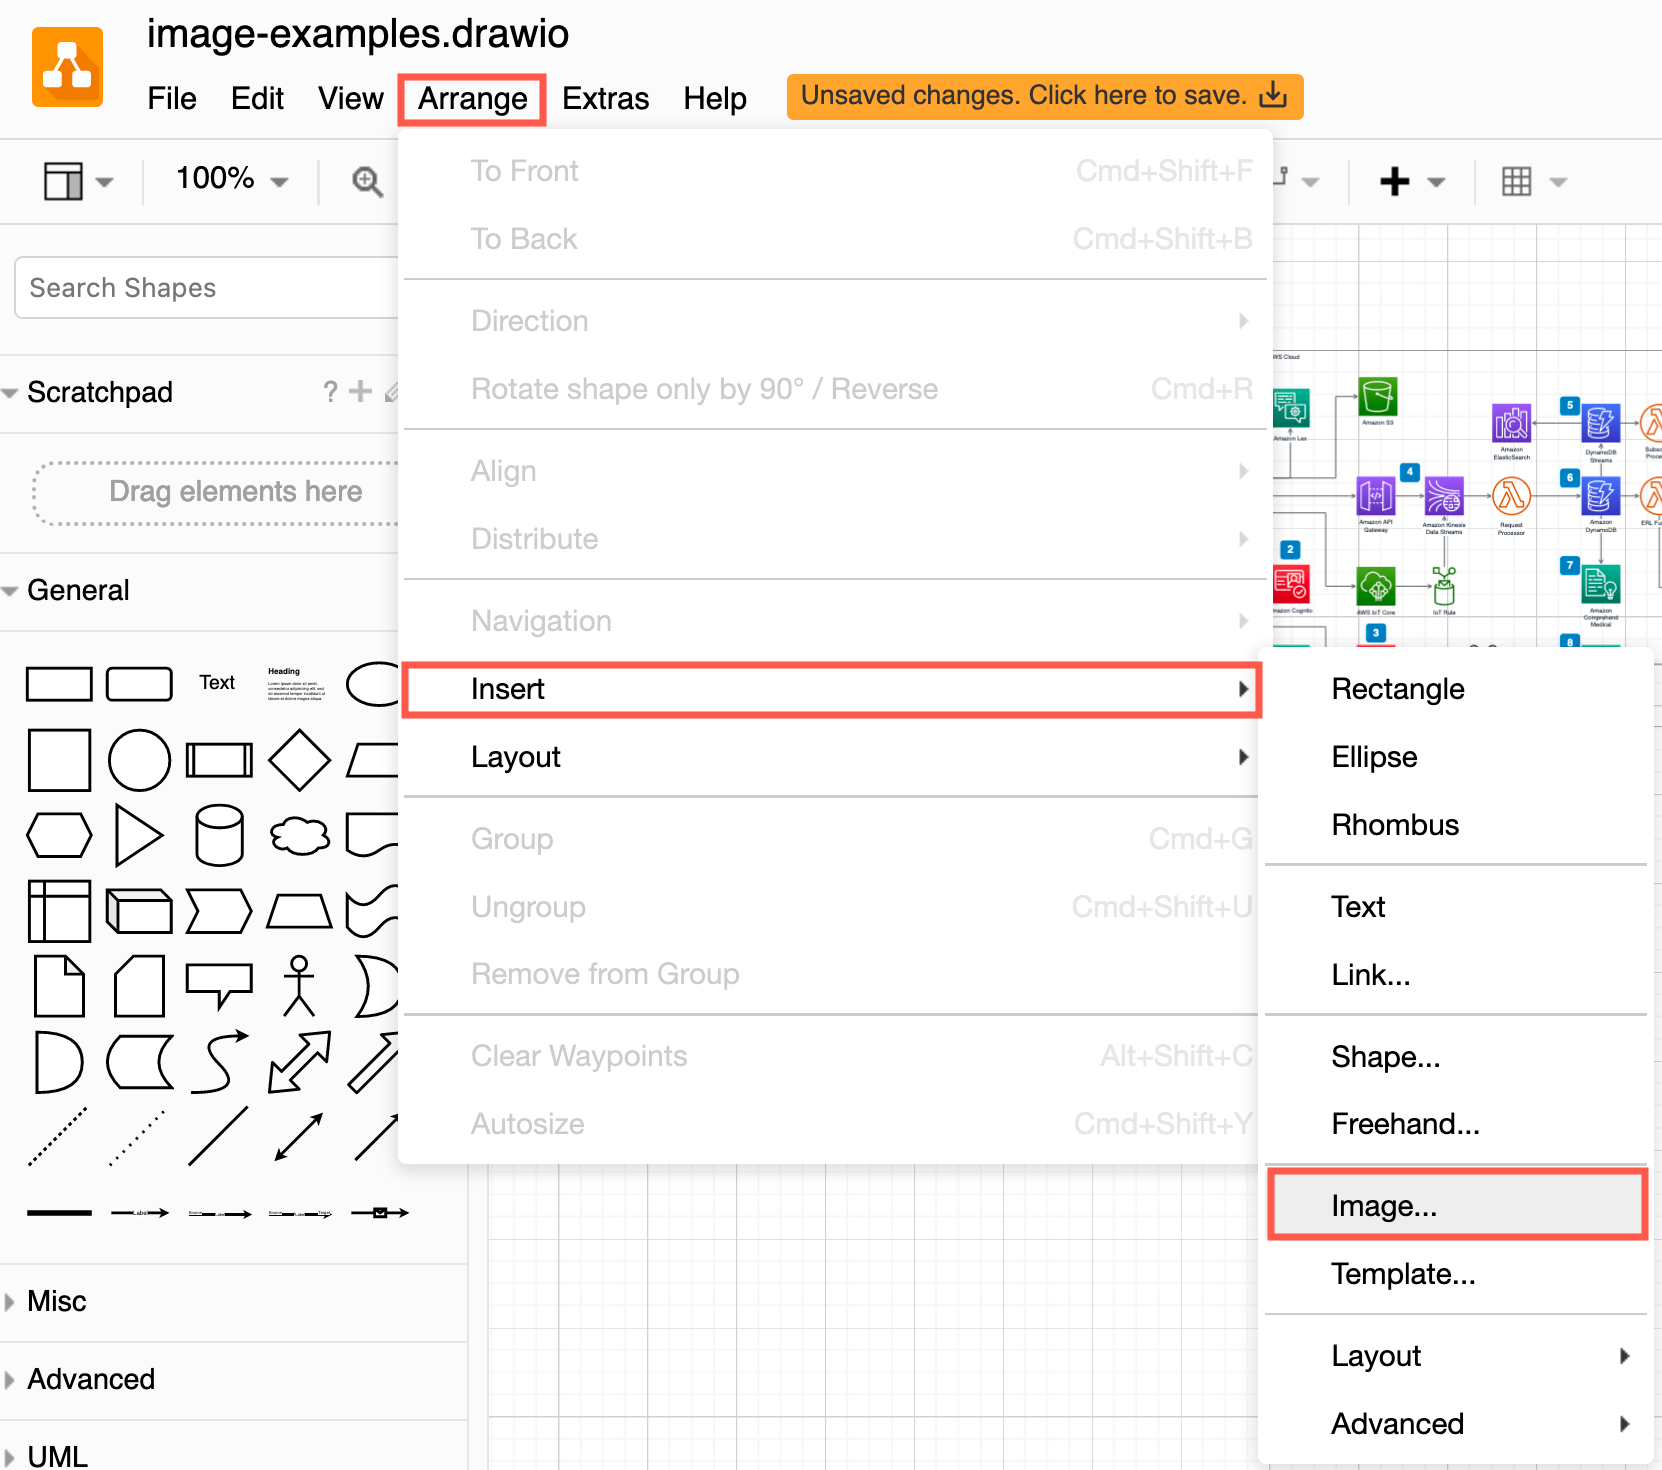 Select Arrange > Insert > Image in the draw.io editor